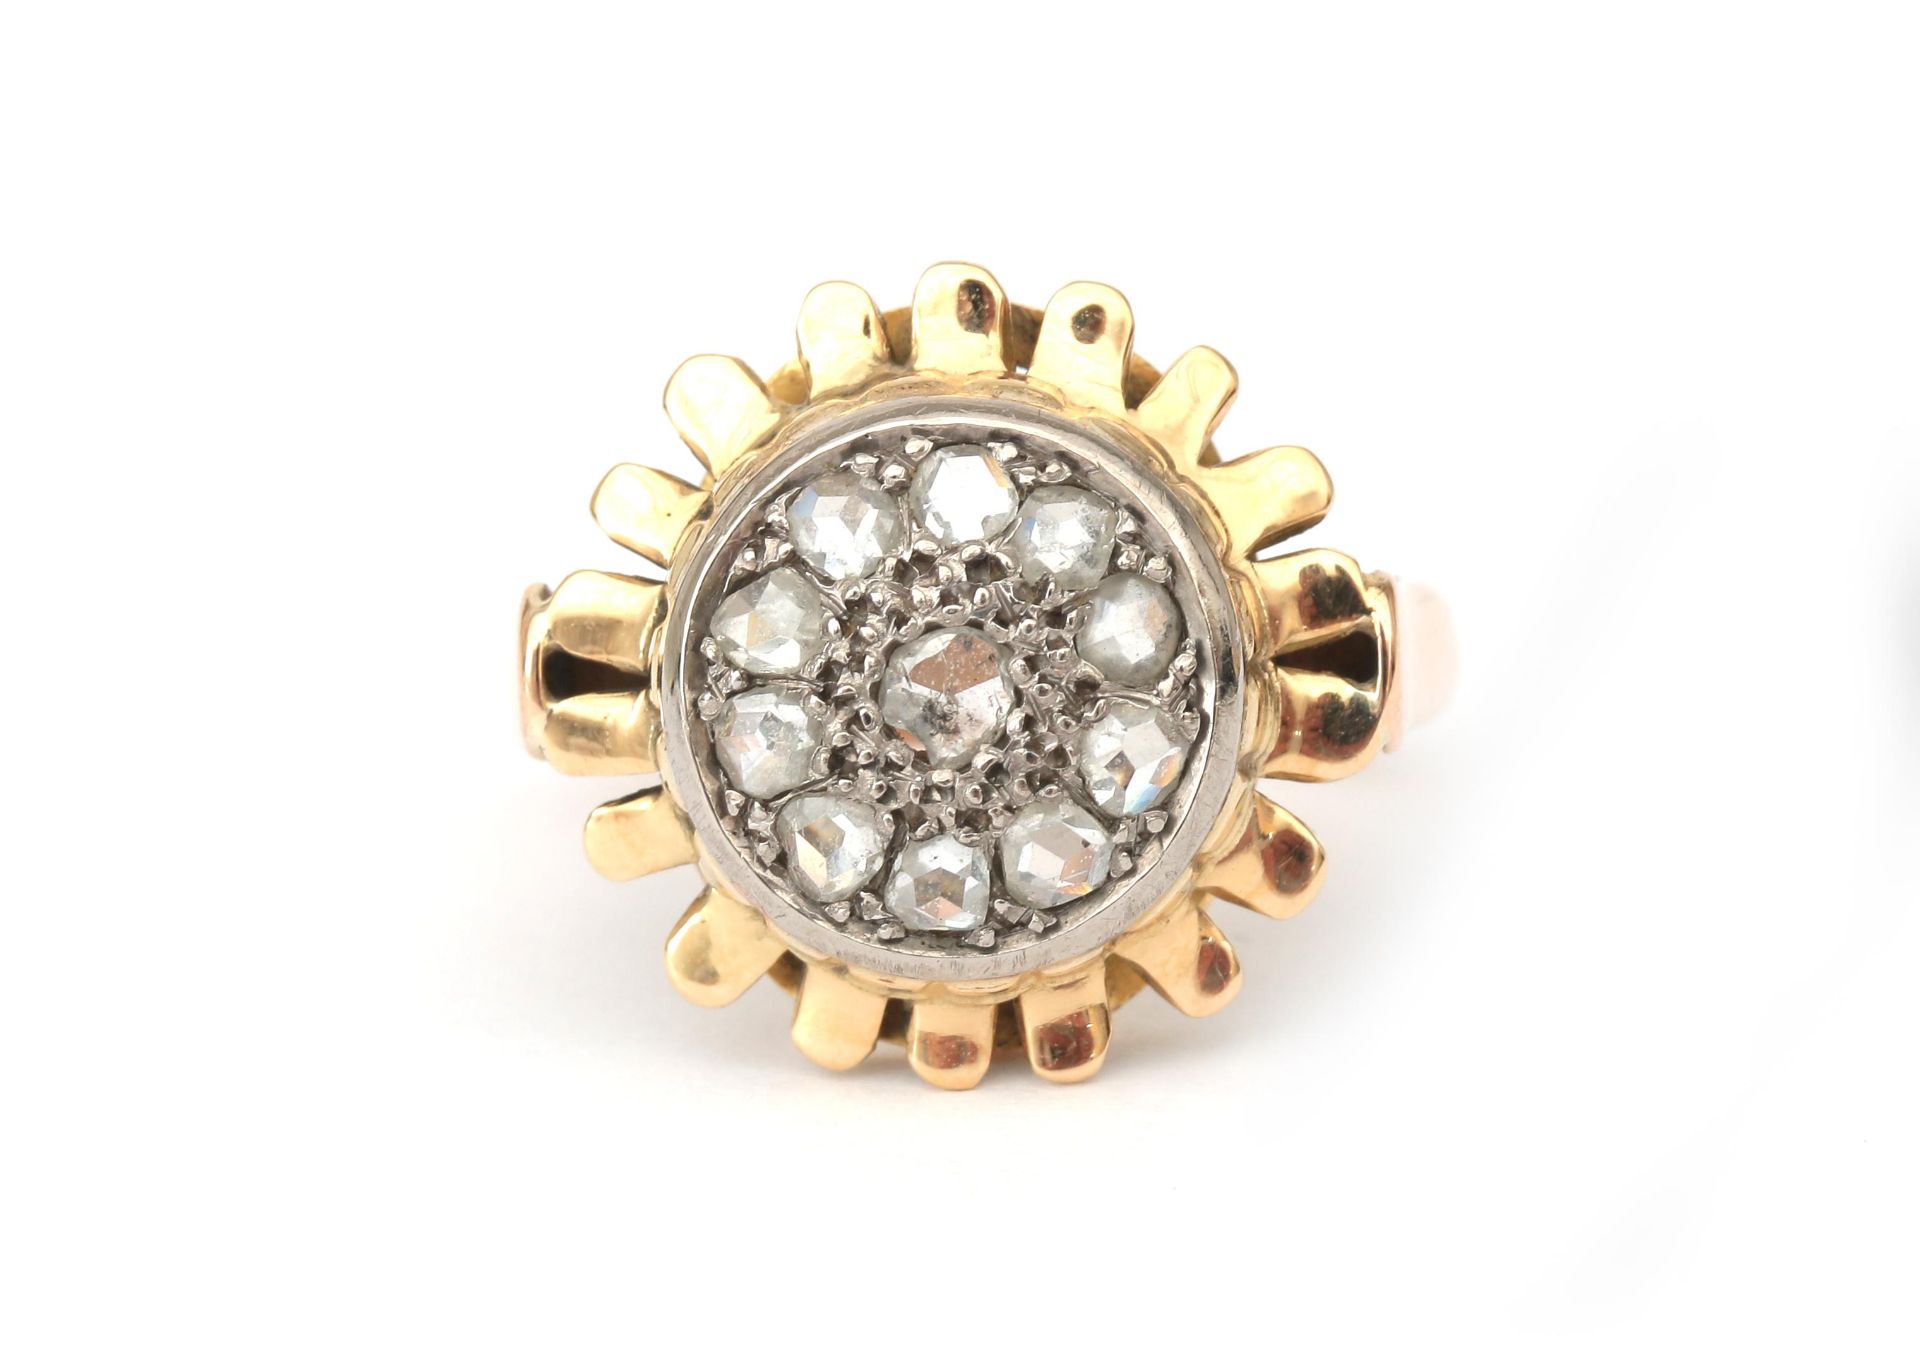 An 18 karat gold rose cut diamond cluster ring